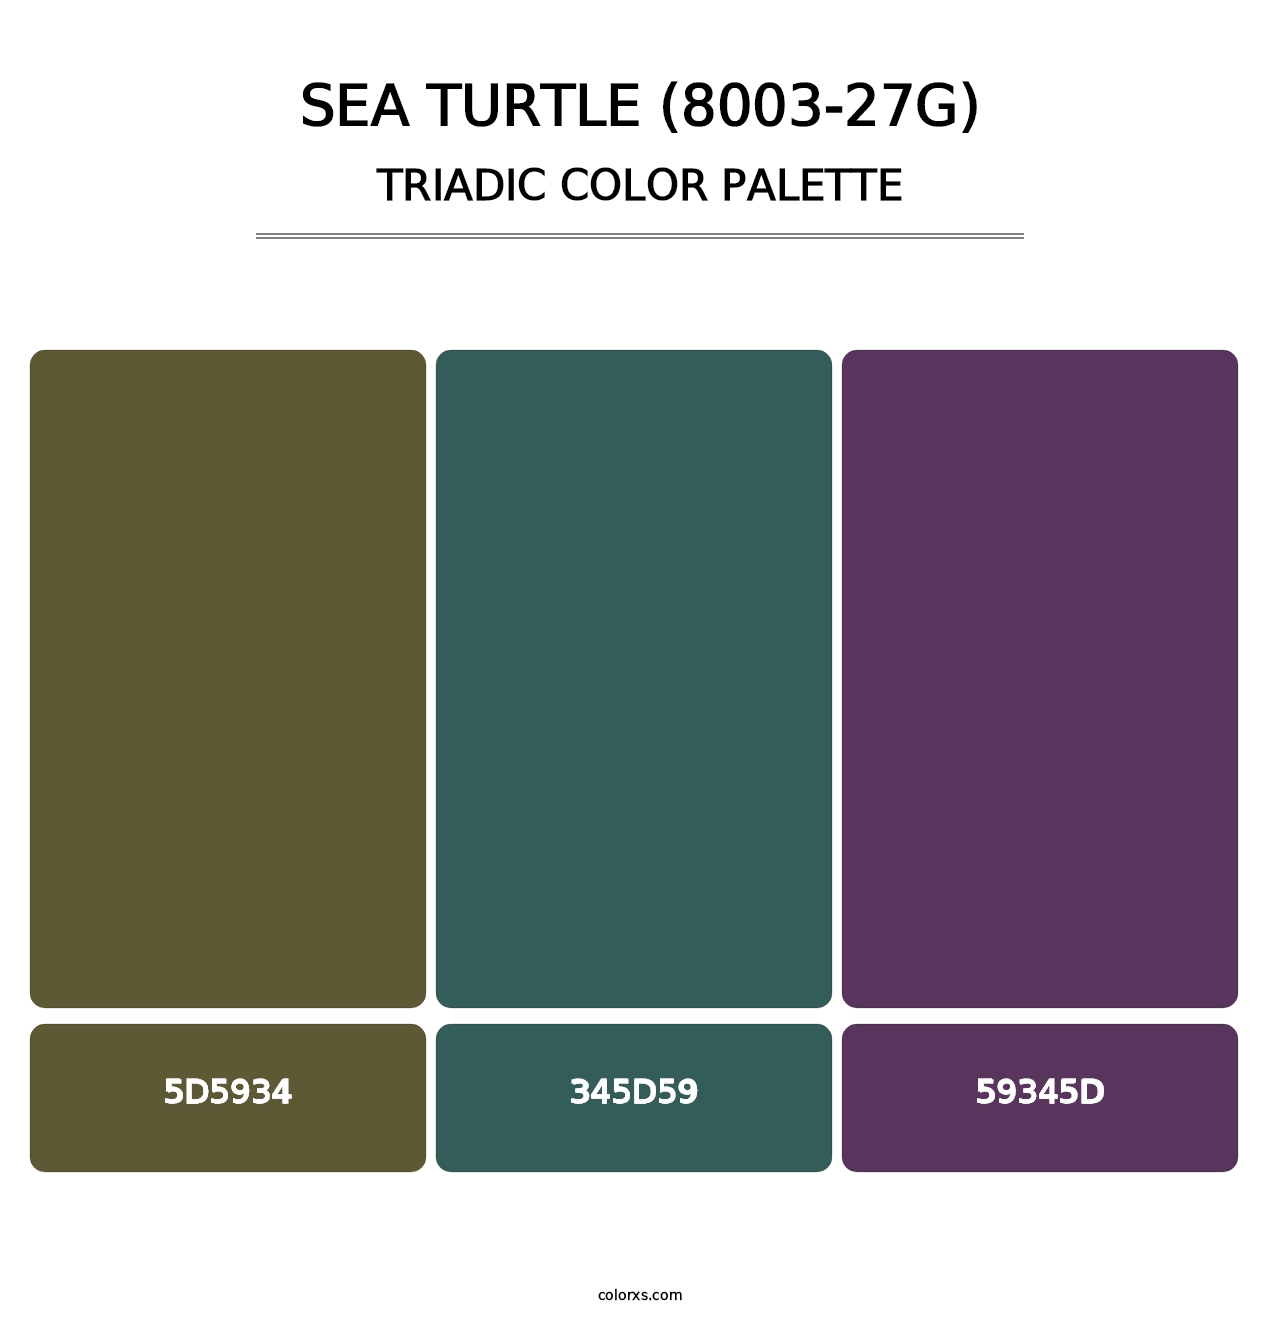 Sea Turtle (8003-27G) - Triadic Color Palette